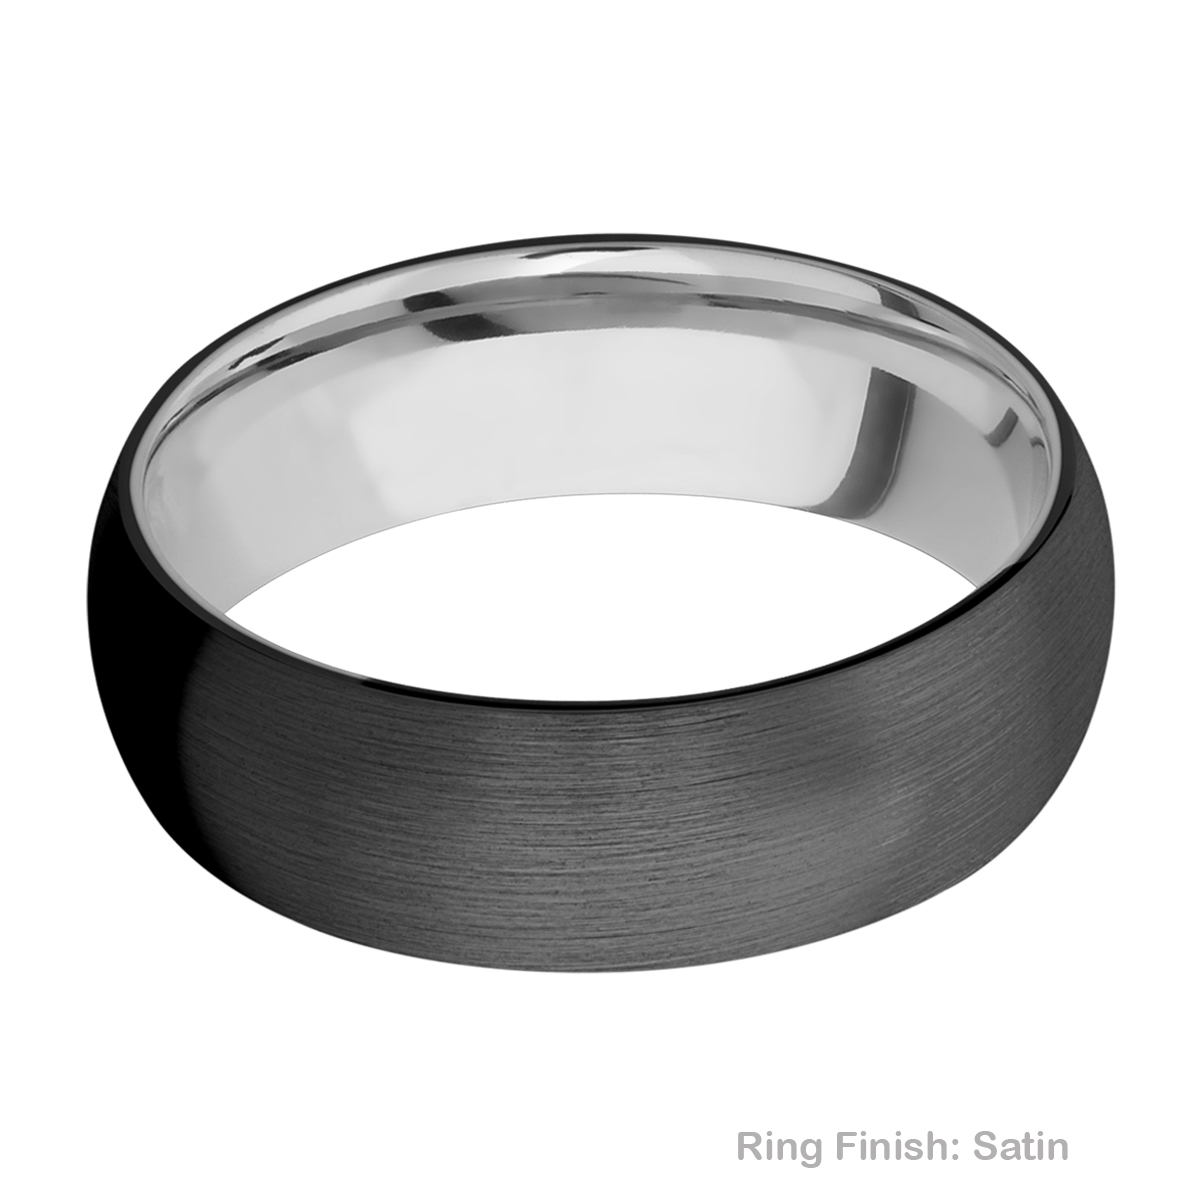 Lashbrook CCSLEEVEZ7D Zirconium and Cobalt Chrome Wedding Ring or Band Alternative View 4